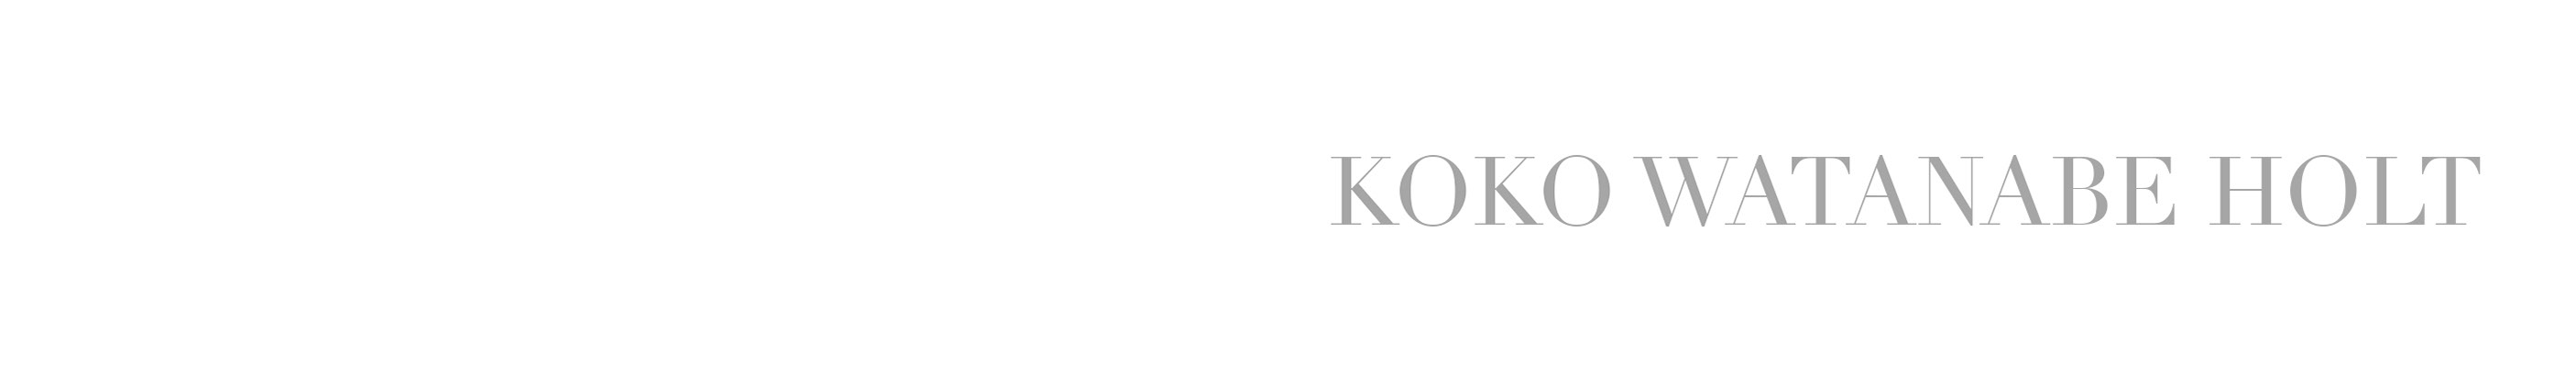 Koko Holt's profile banner